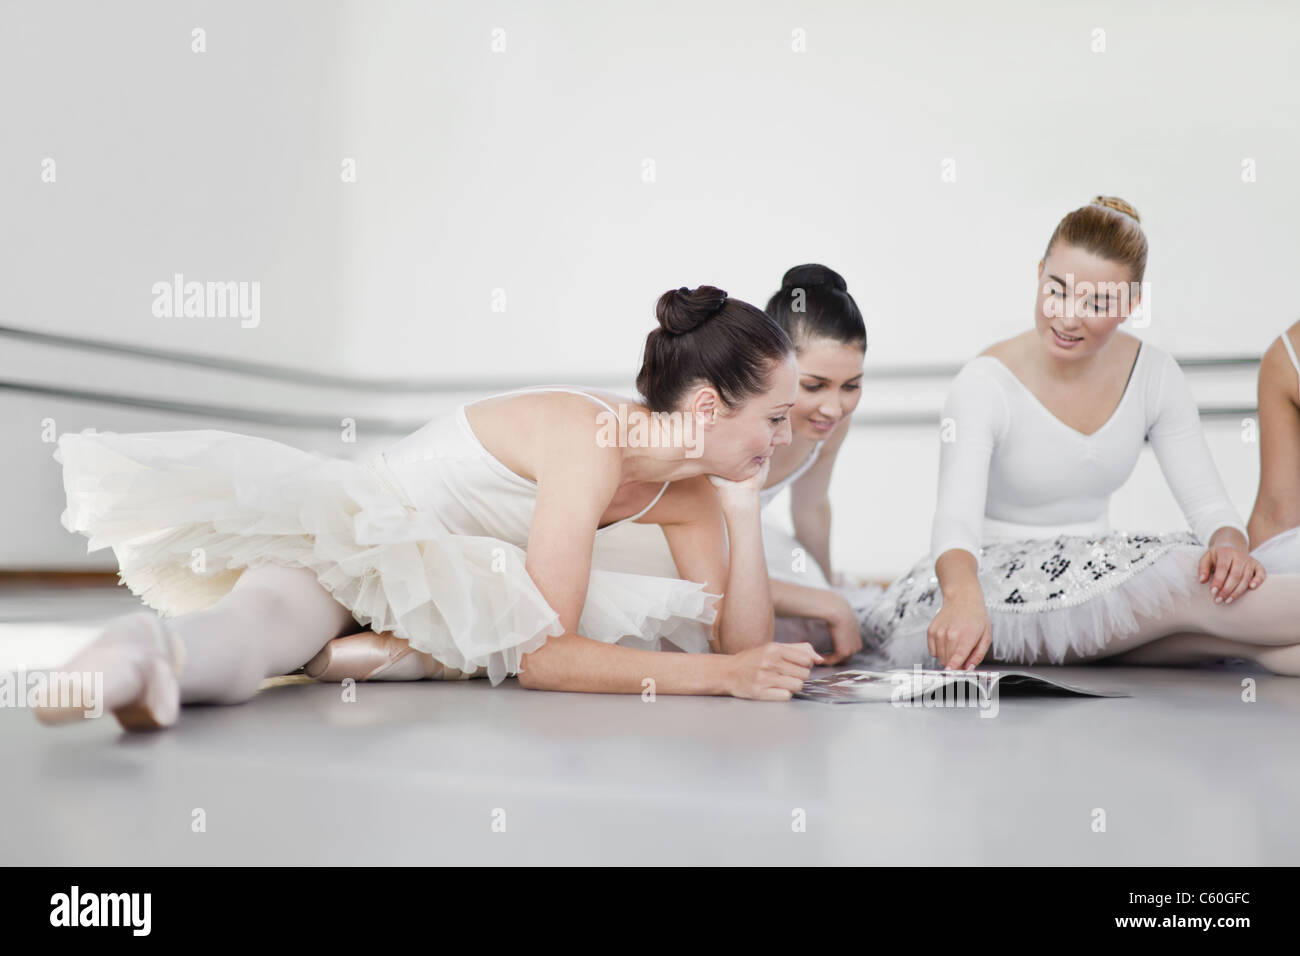 Ballet dancers reading magazine together Stock Photo